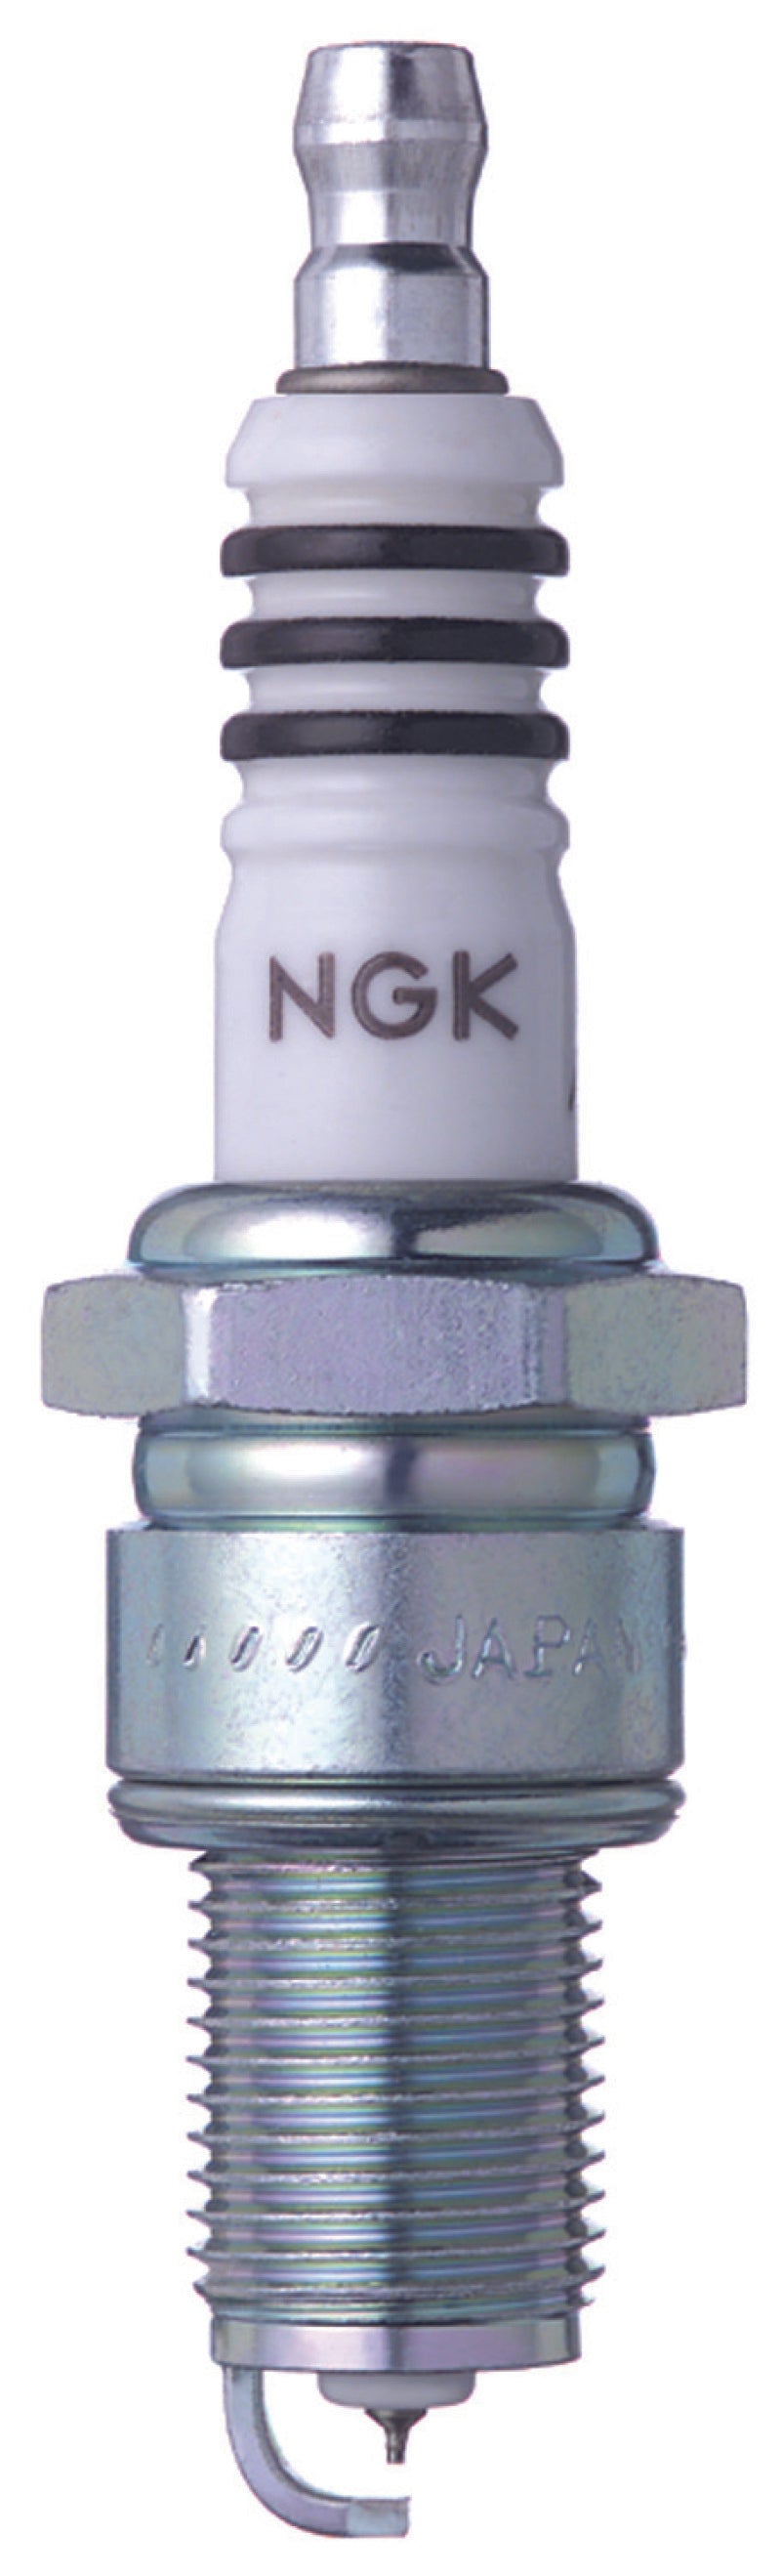 NGK IX Iridium Spark Plug Box of 4 (BPR8EIX) -  Shop now at Performance Car Parts